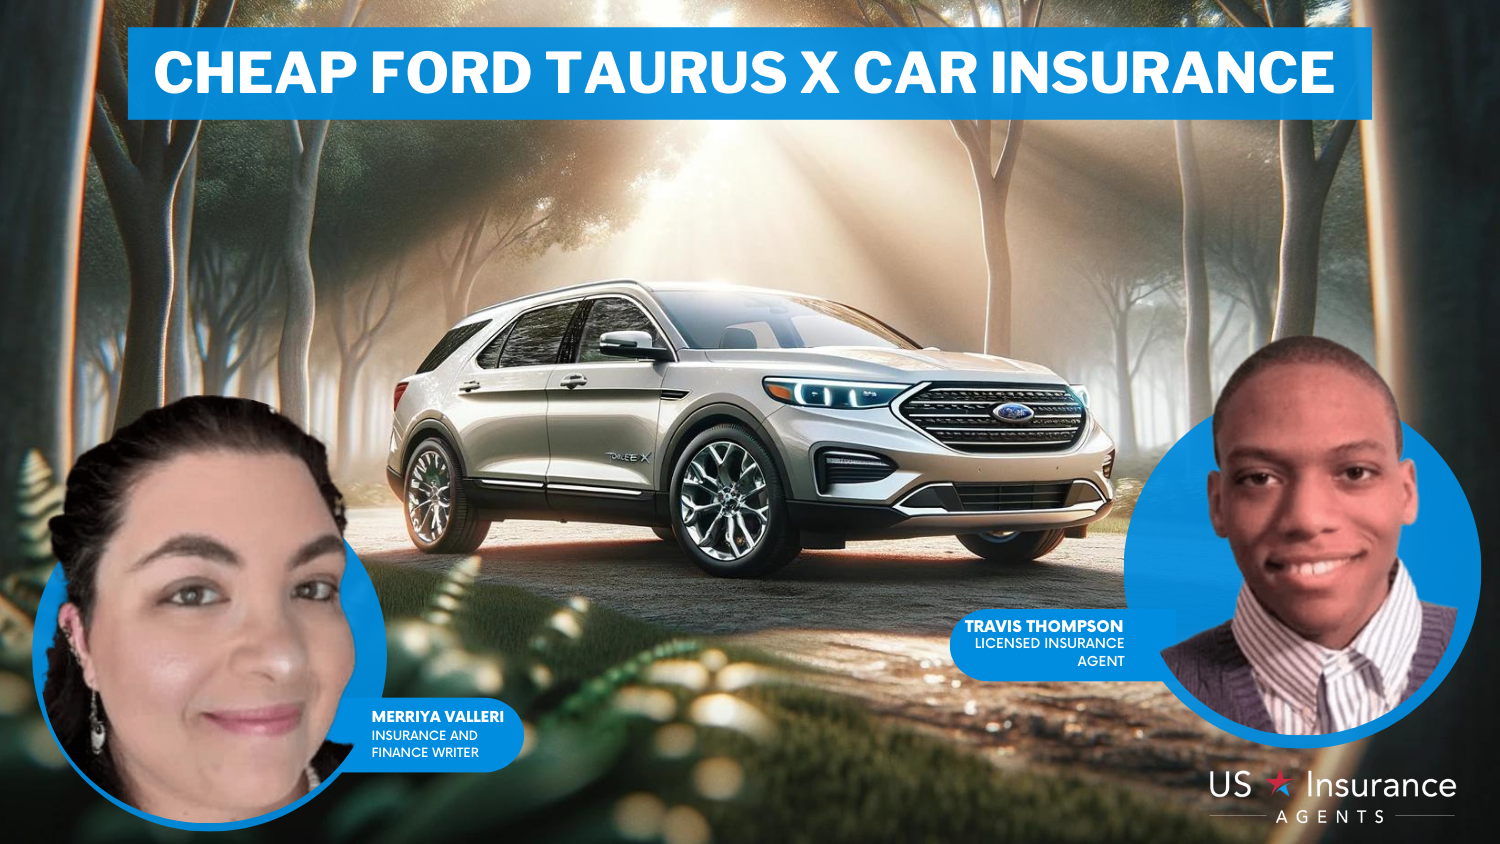 Cheap Ford Taurus X Car Insurance: State Farm, American Family, and Progressive